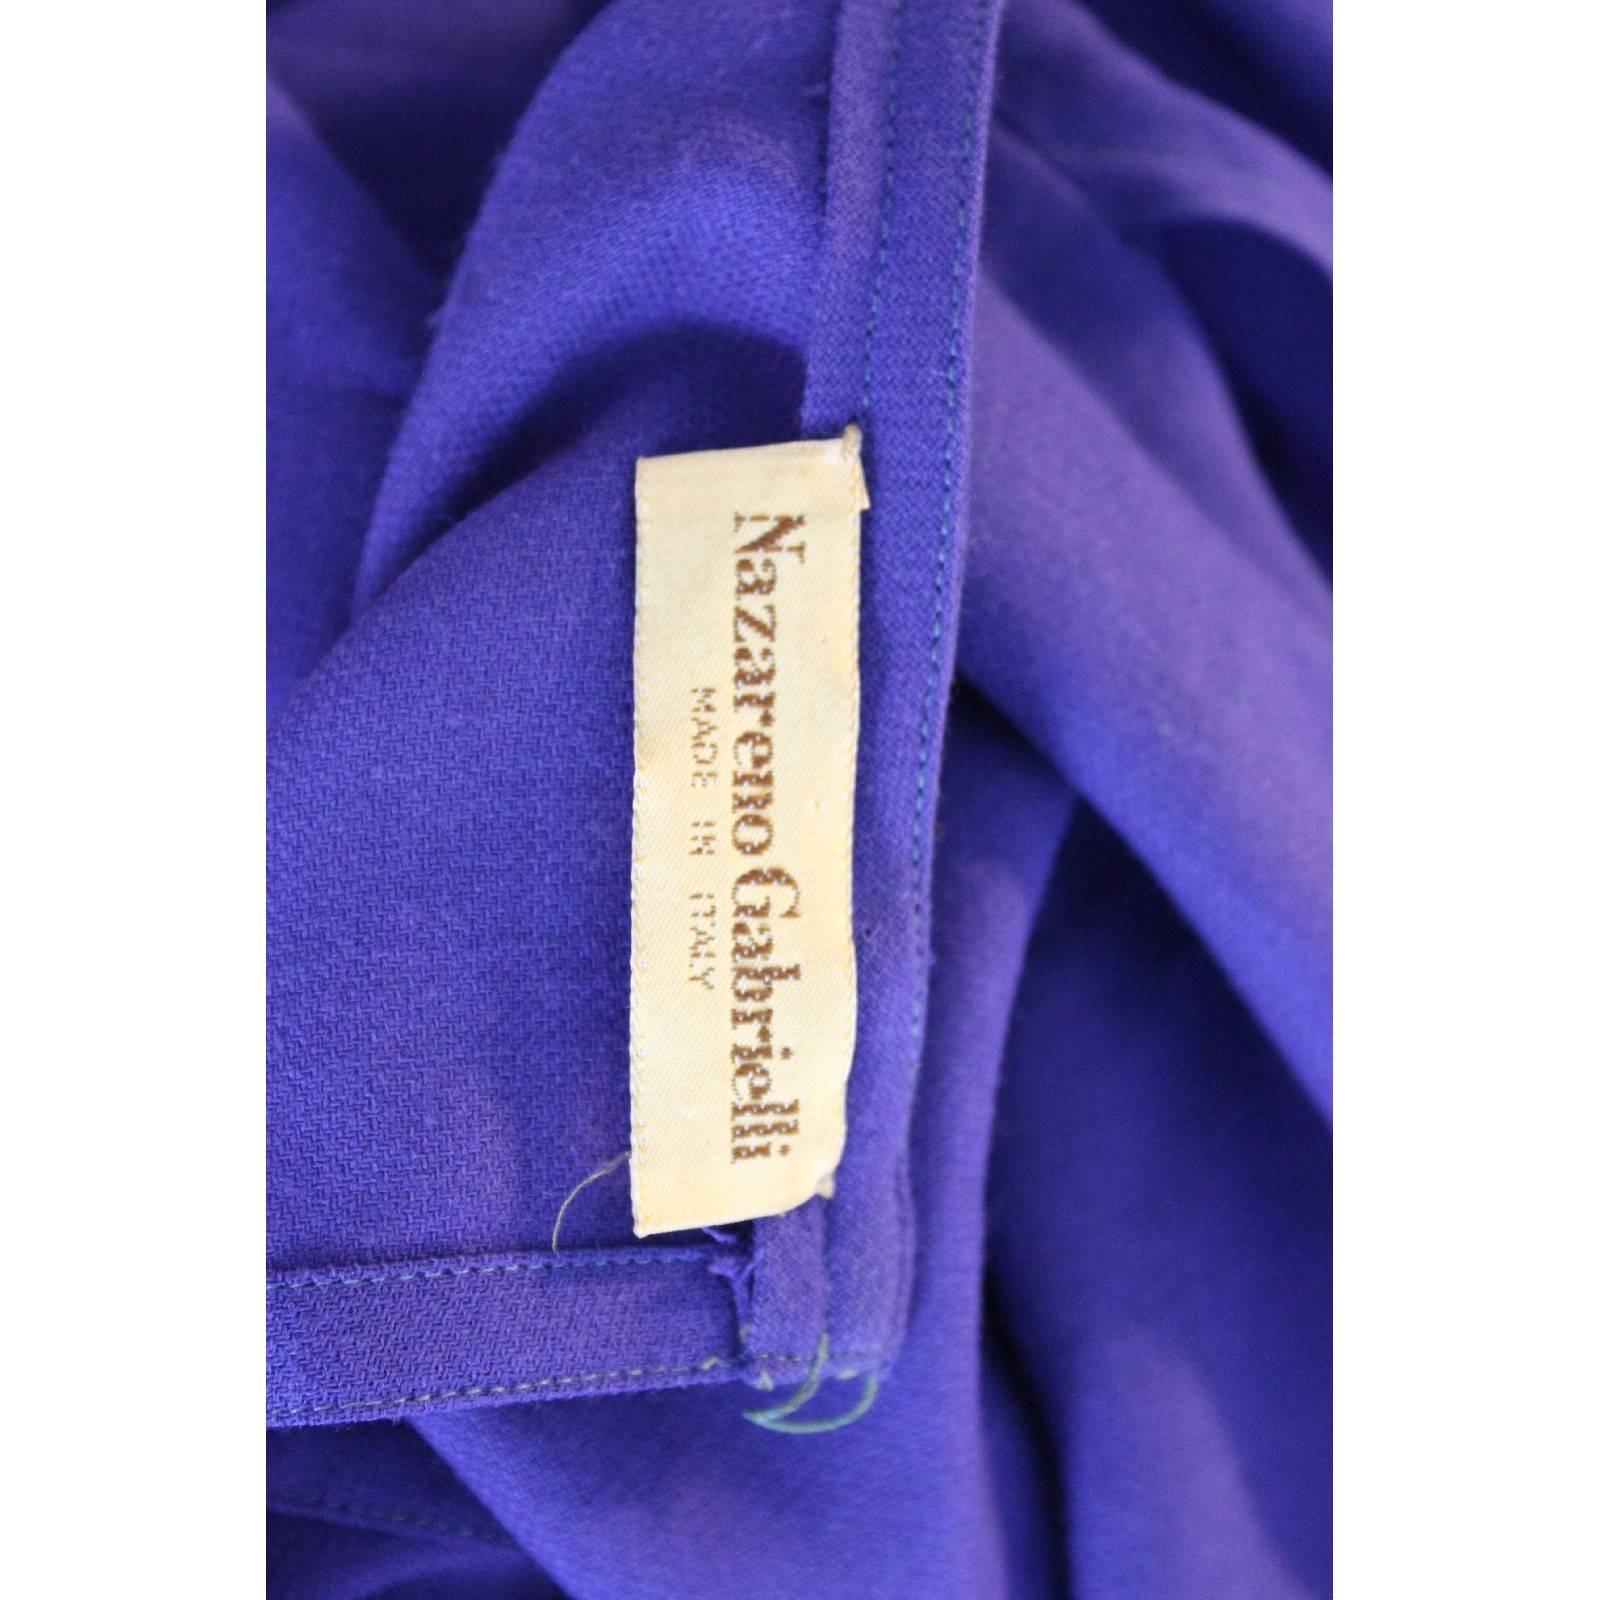 Women's Nazareno Gabrielli wool blue dress tunic flower size 42 women’s 1980s vintage